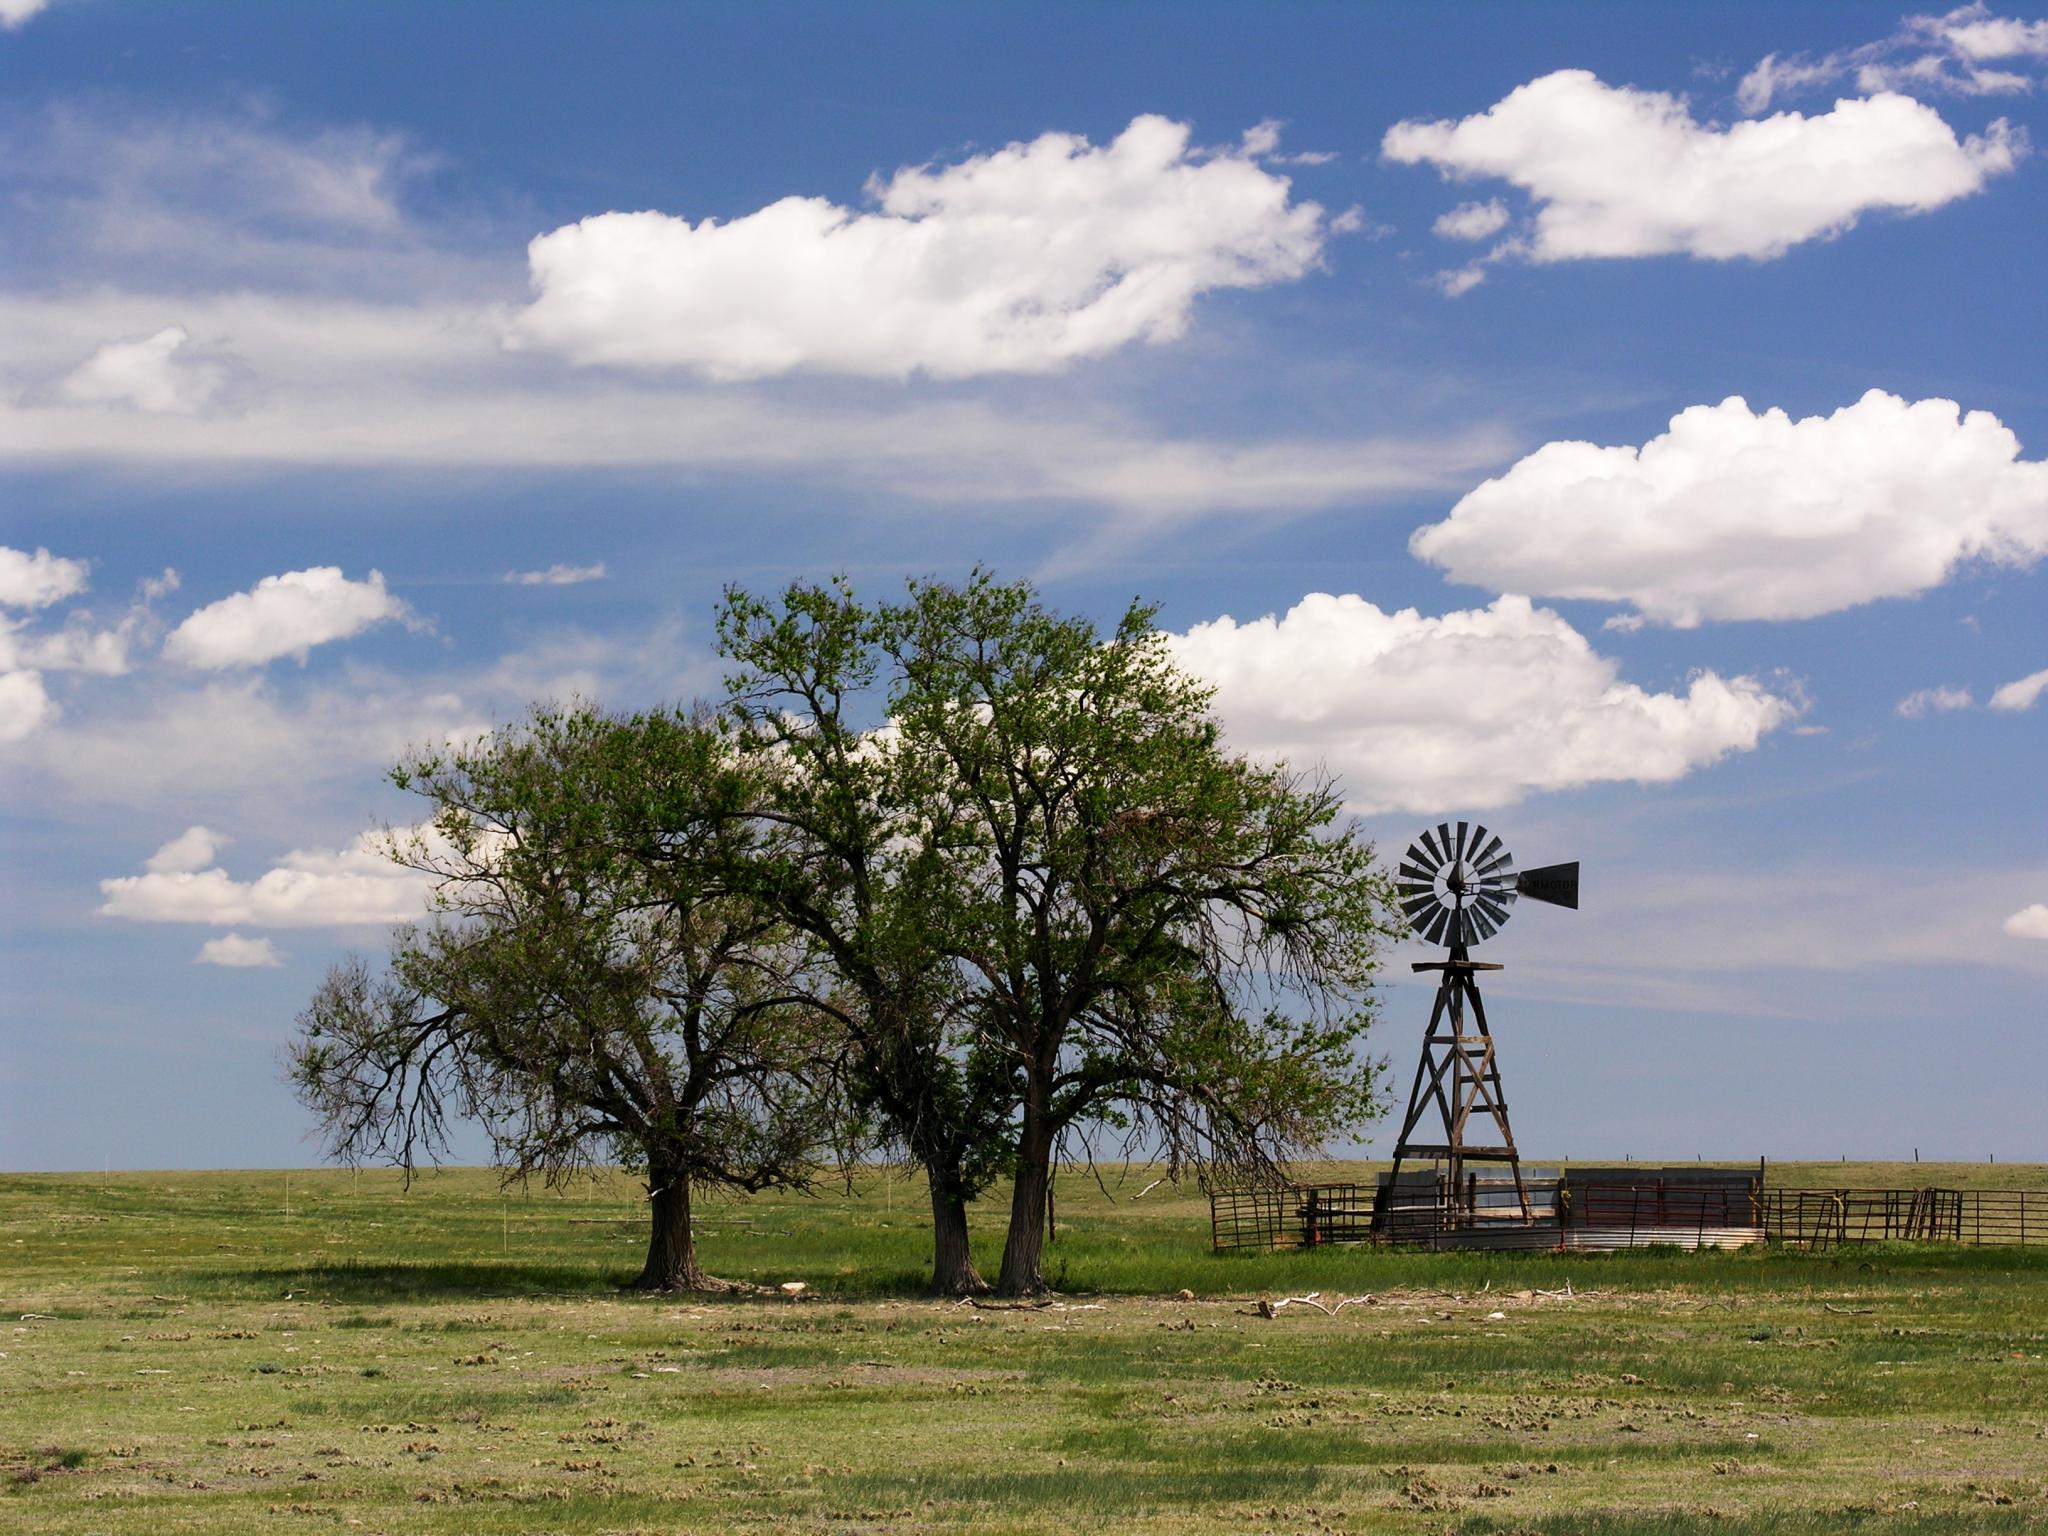 Windmills still dot the landscape in this arid landscape. 